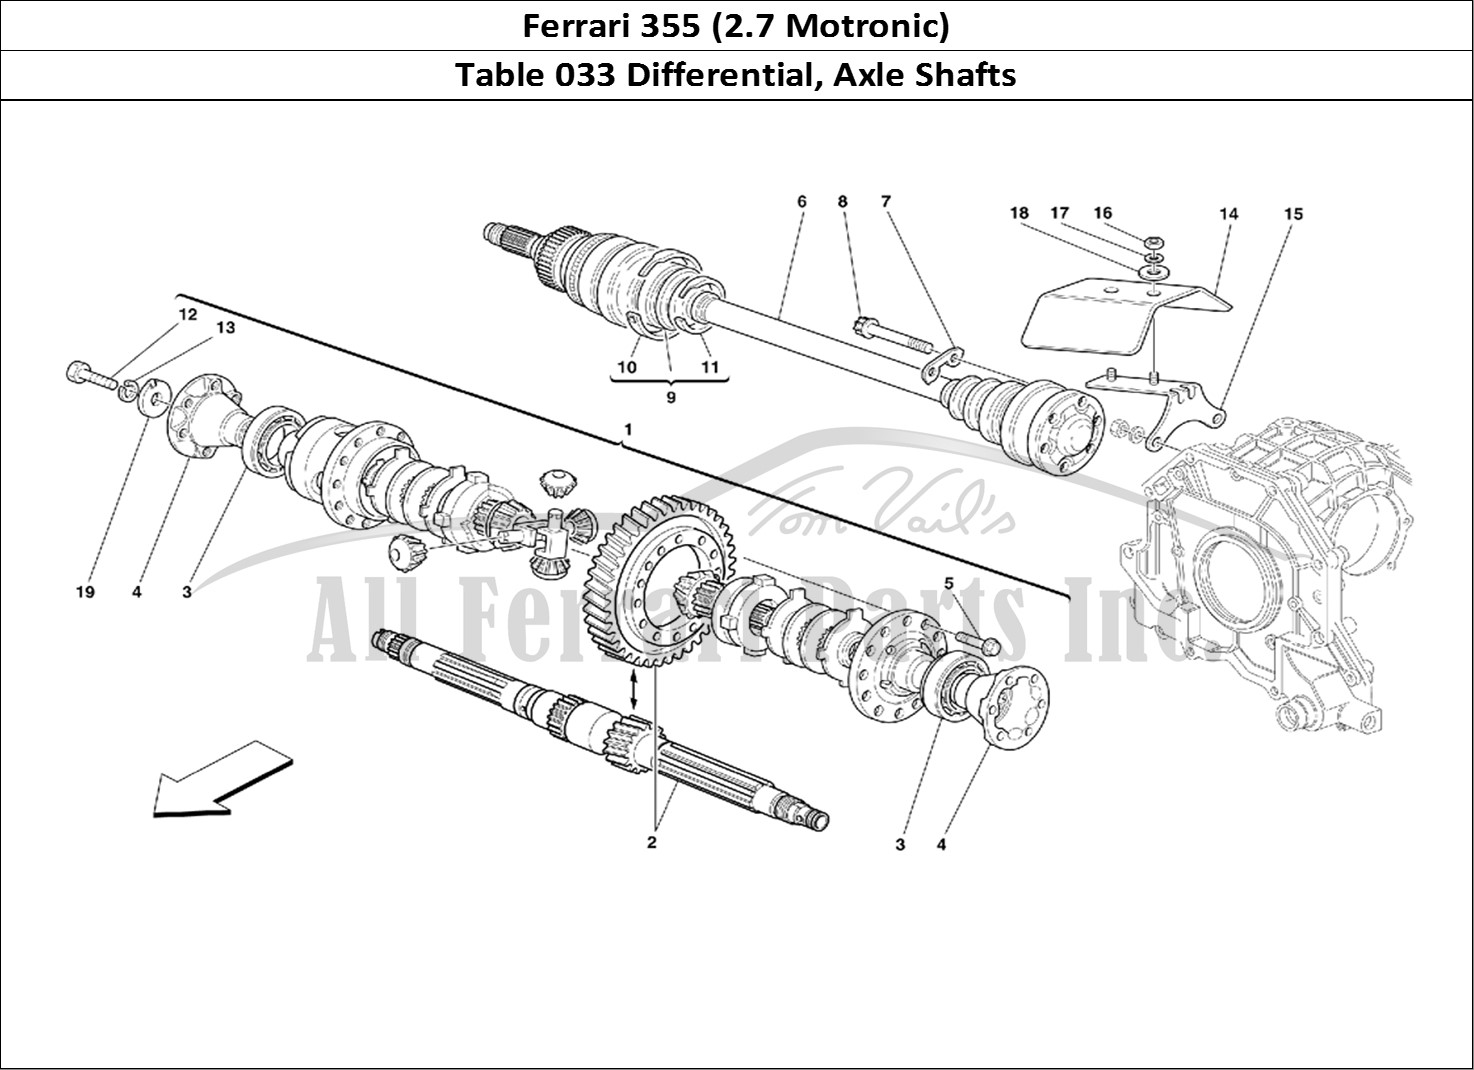 Ferrari Parts Ferrari 355 (2.7 Motronic) Page 033 Differential & Axle Shaft